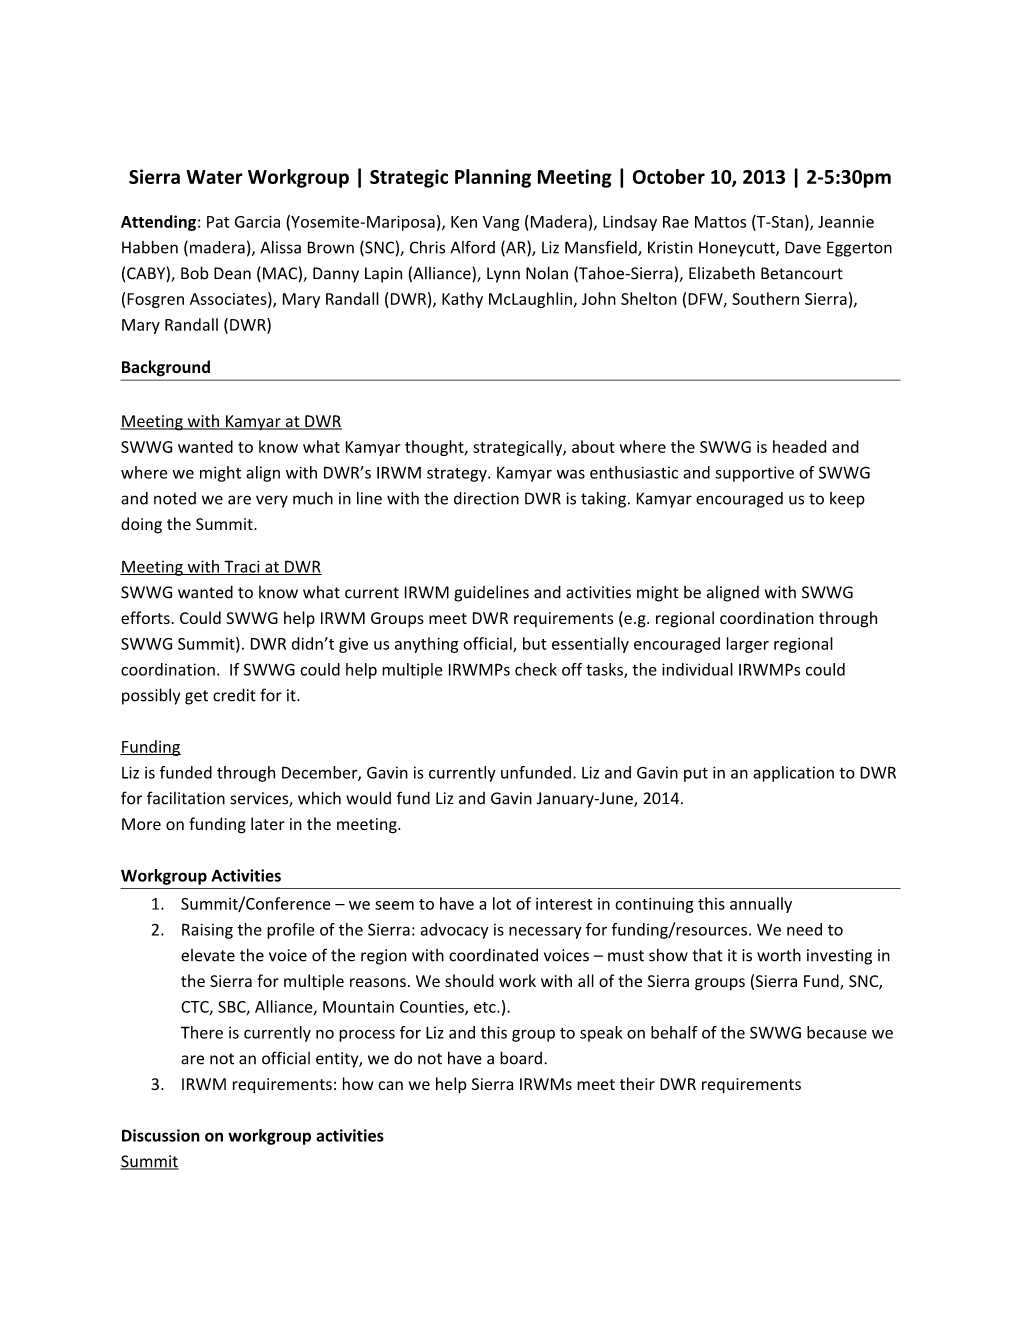 Sierra Water Workgroup Strategic Planning Meeting October 10, 2013 2-5:30Pm